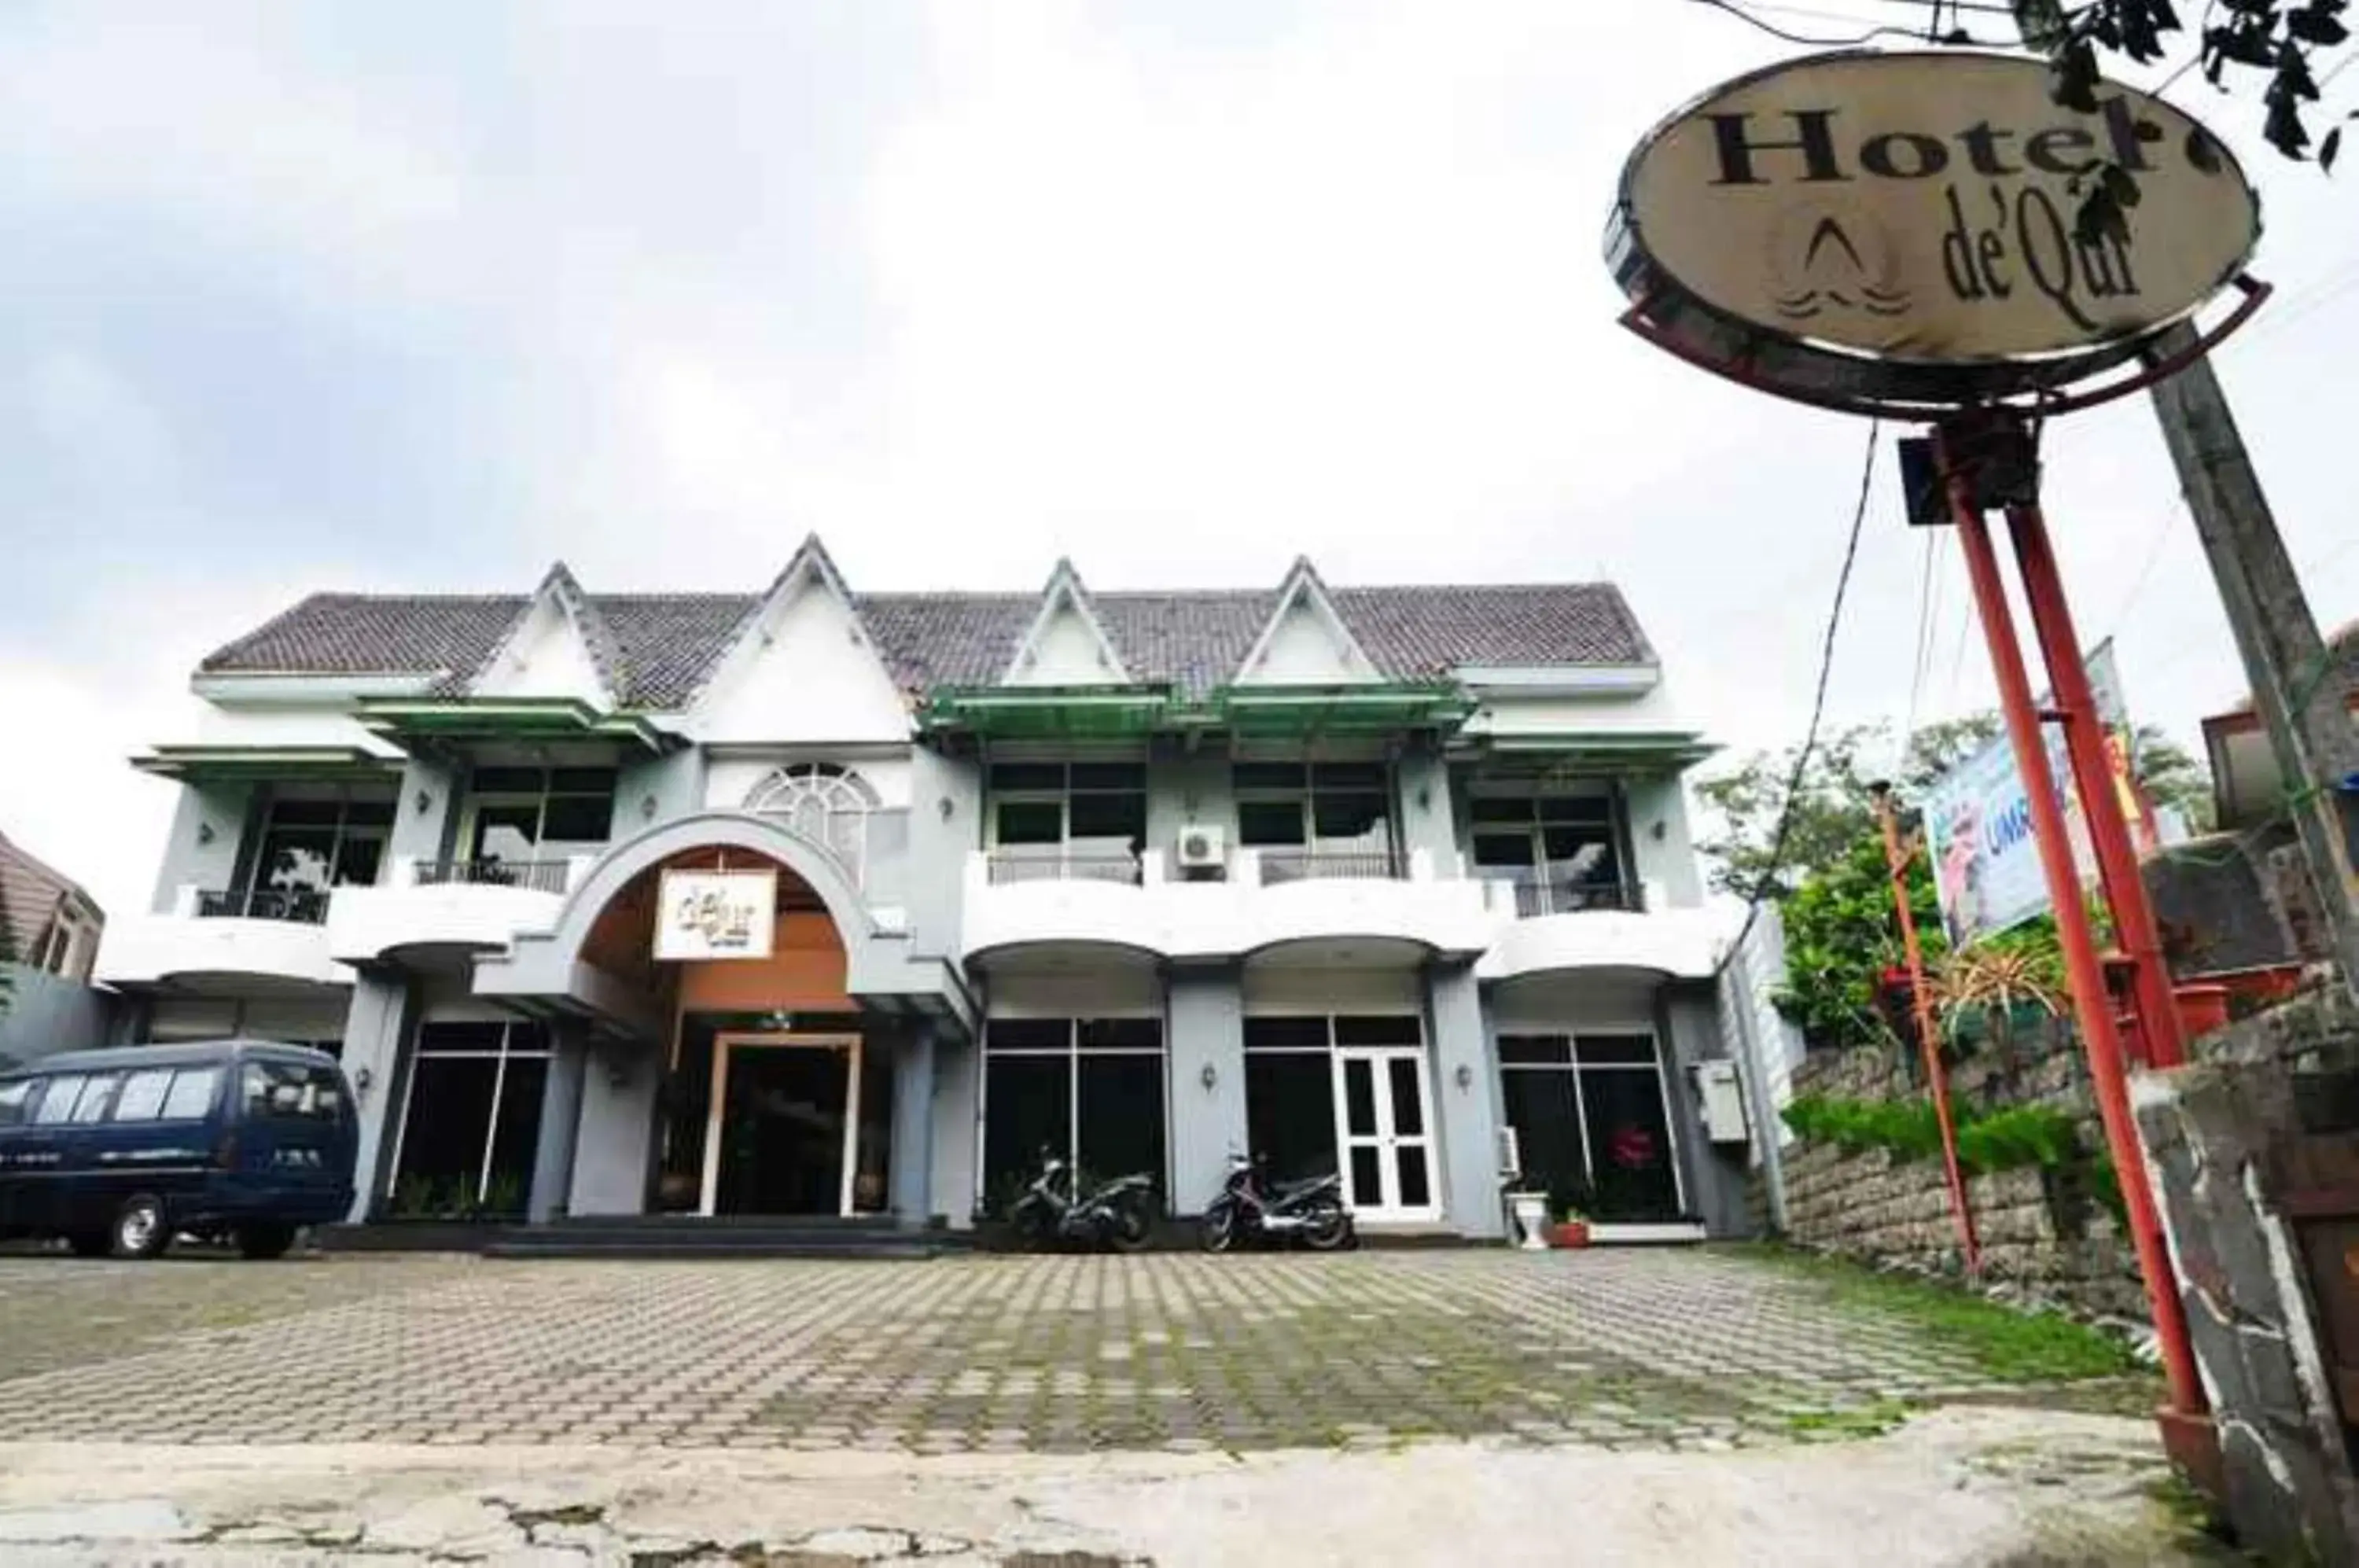 Property building in De'Qur Hotel Bandung